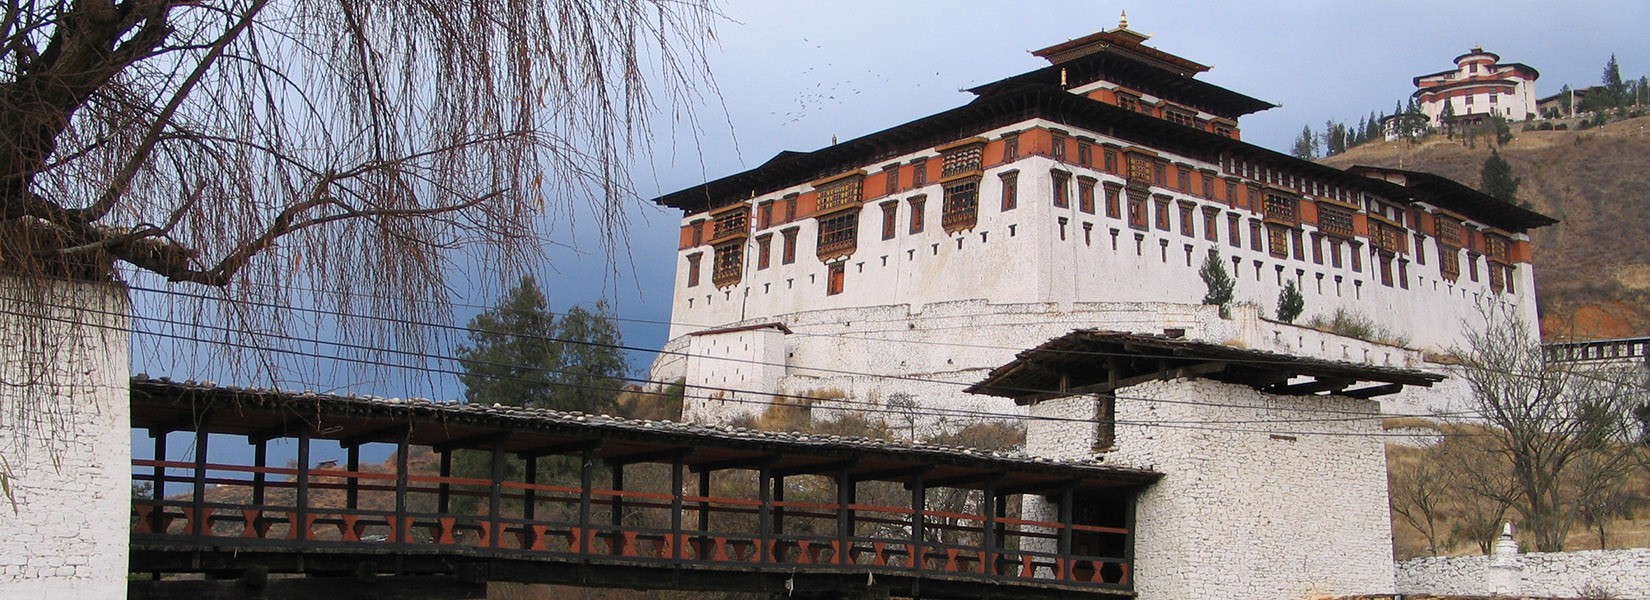 Bhutan cultural Tour 4 days